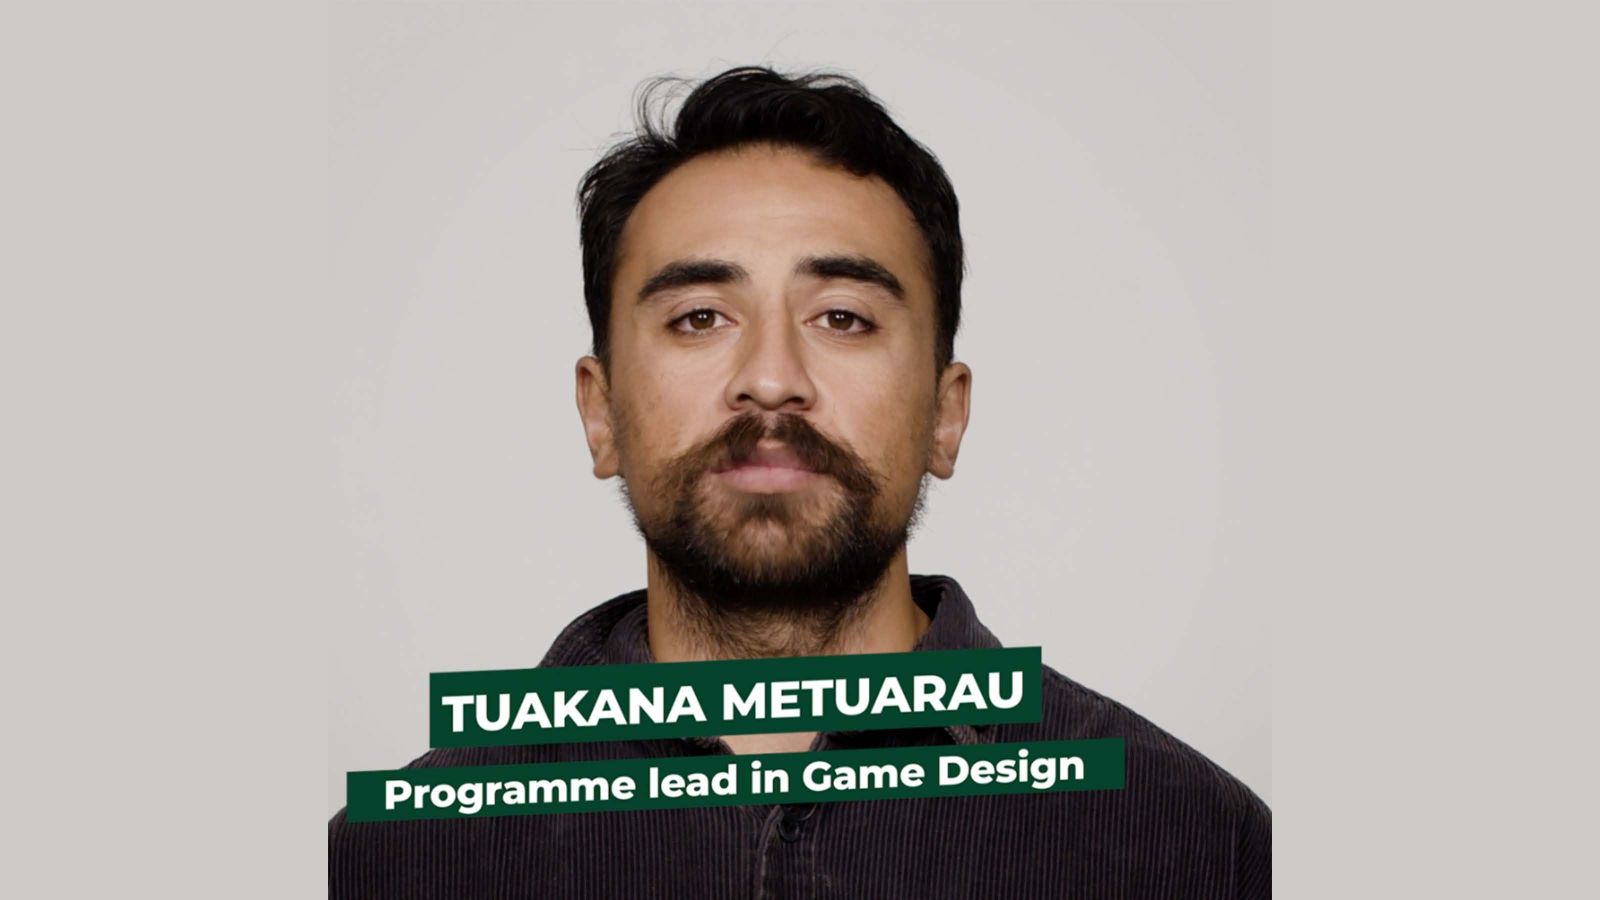 Tuakana Metuarau stands facing the camera against a grey background.